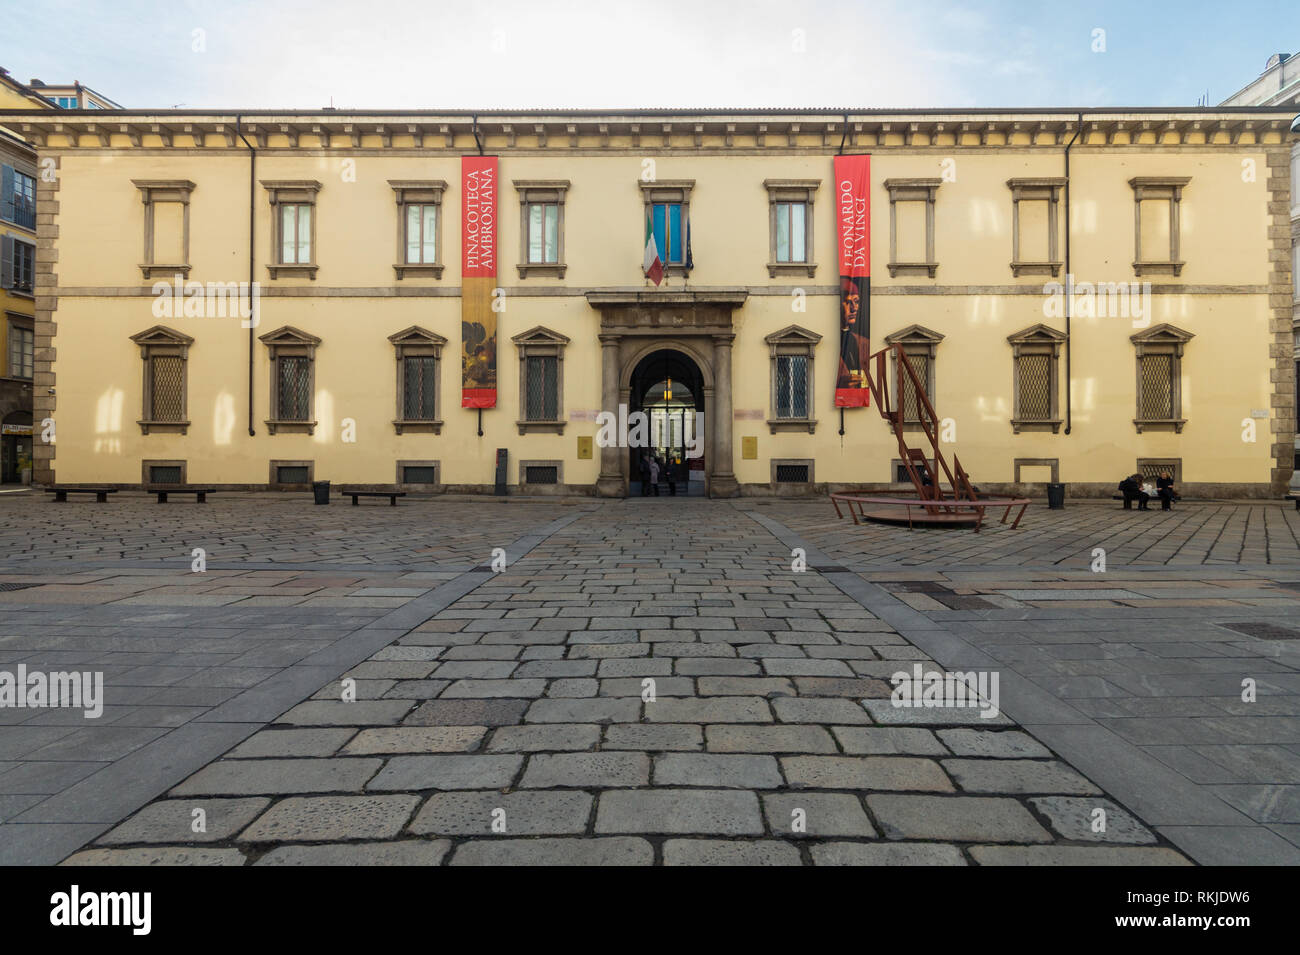 Le palais de la Biblioteca & galerie d'art Pinacoteca Ambrosiana de Milan, façade néoclassique sur la Piazza Pio XI square Banque D'Images